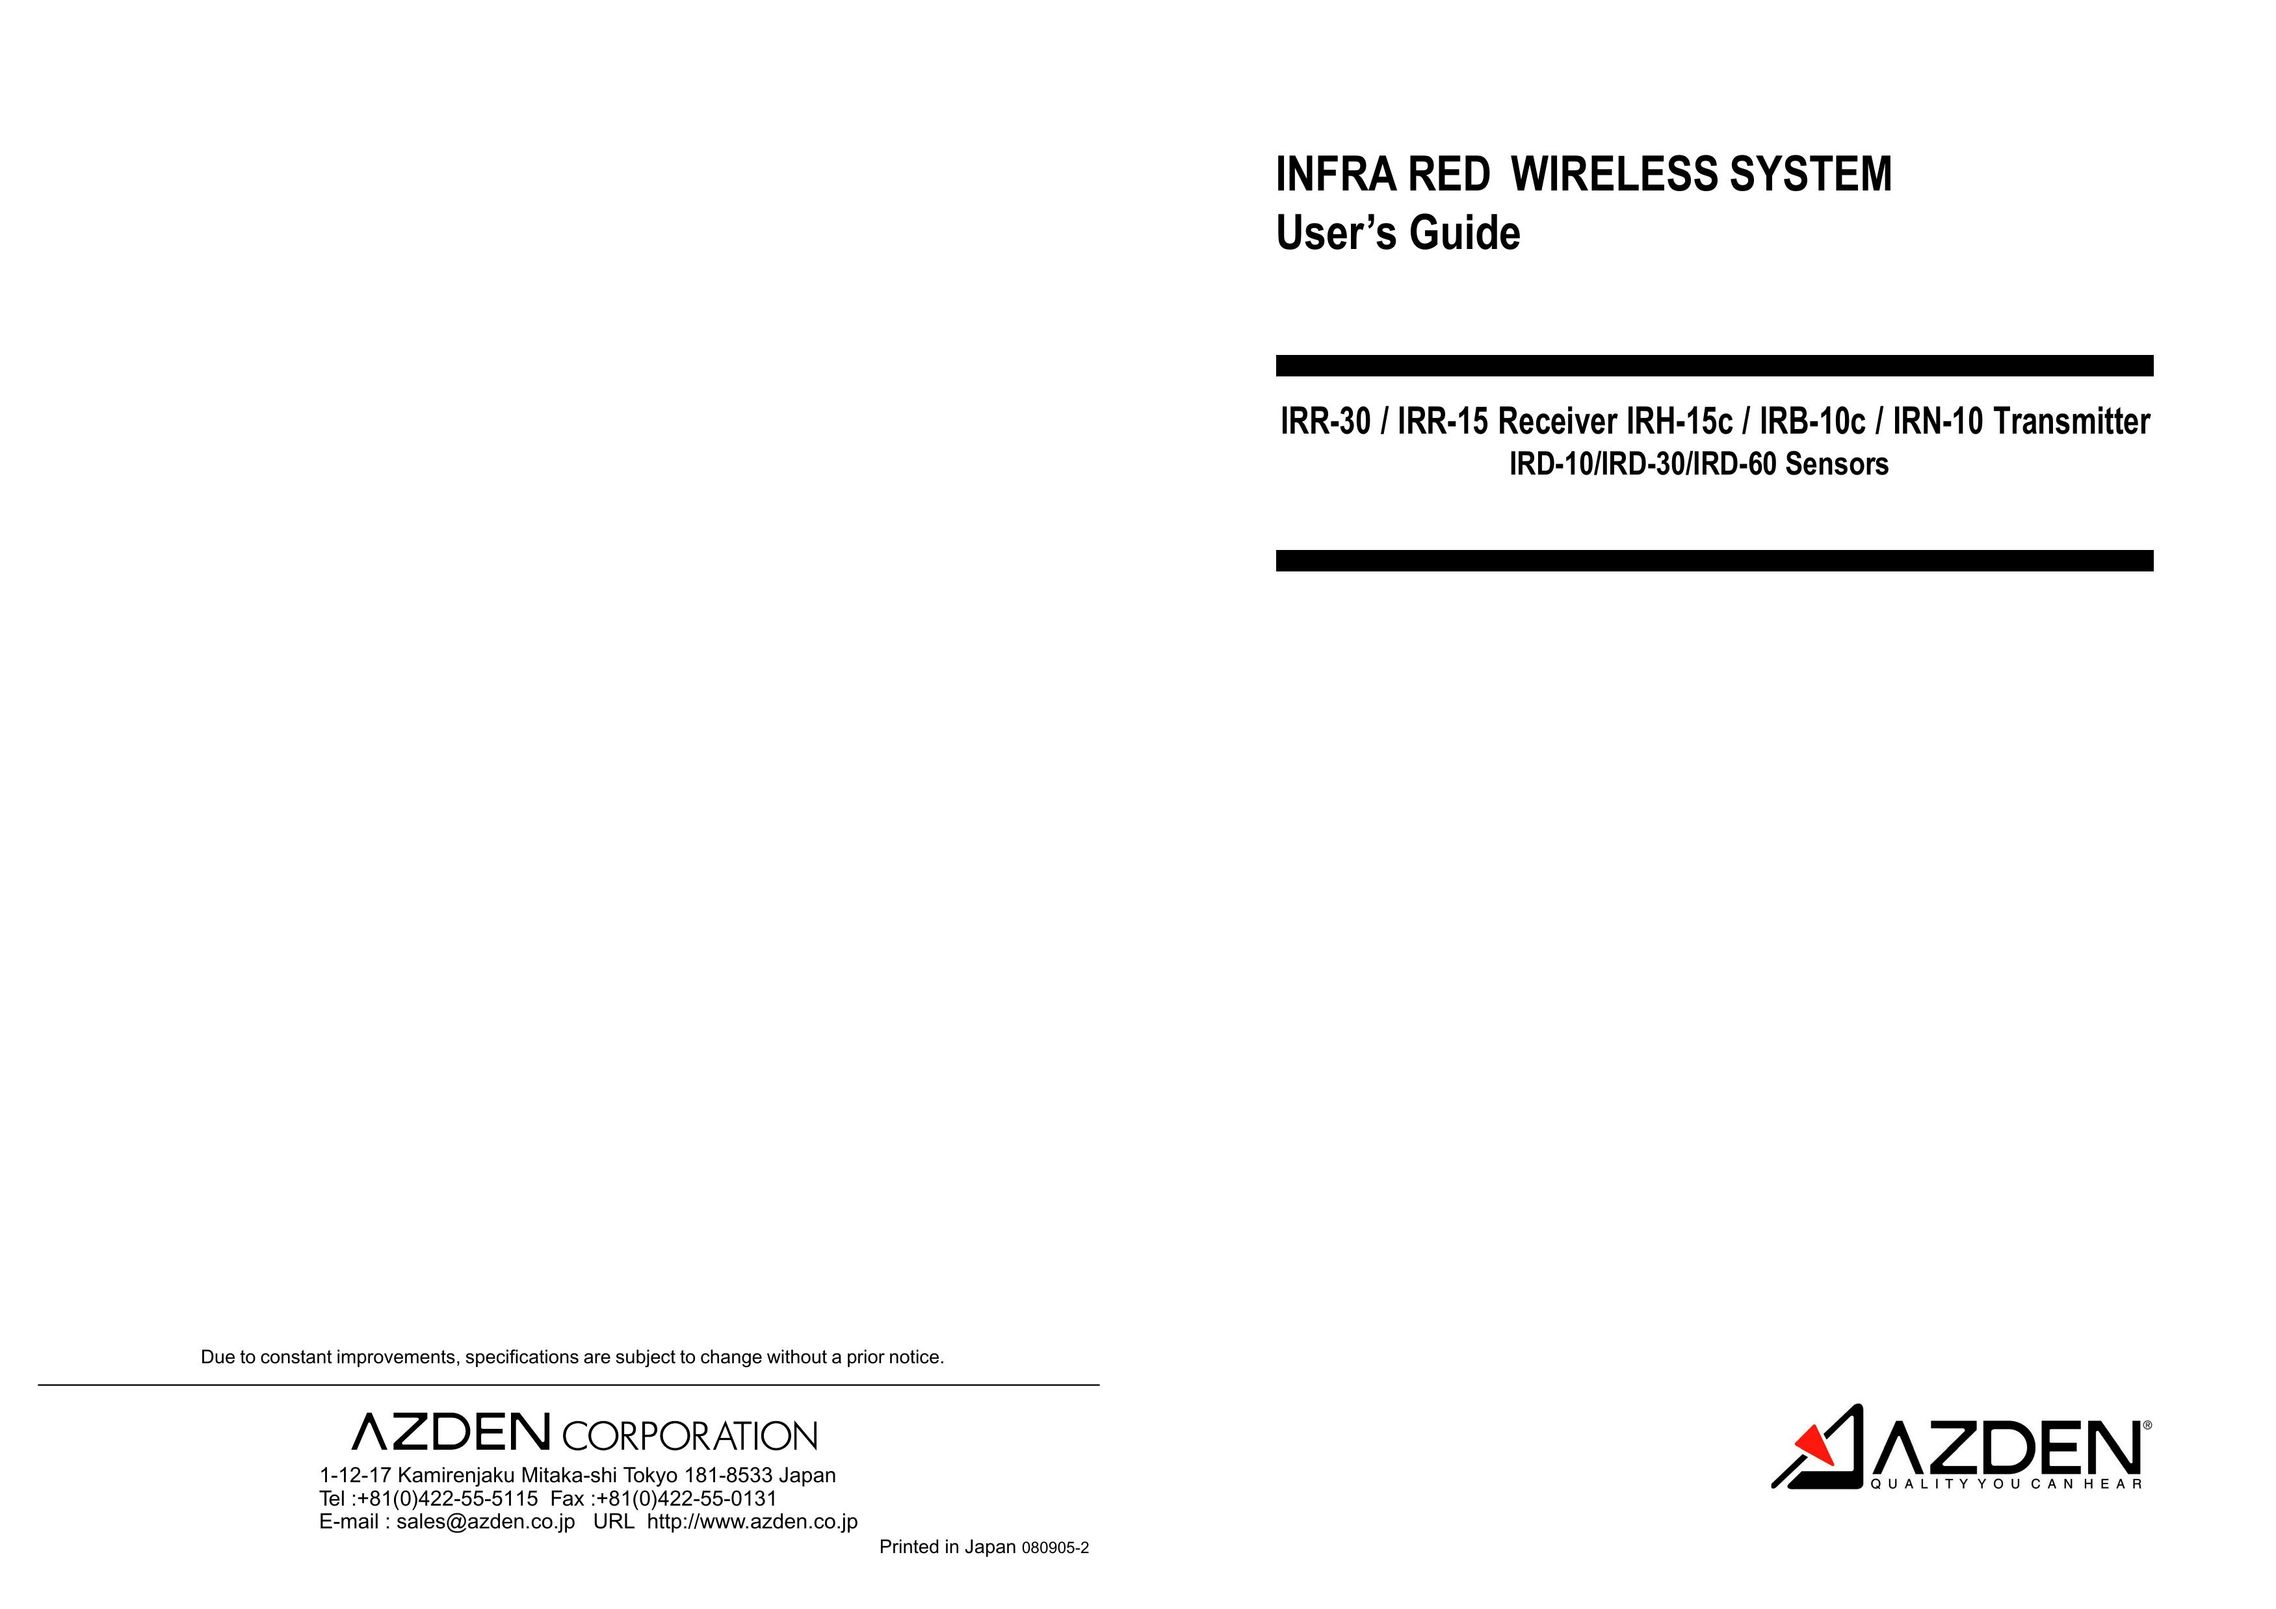 Azden IRD-60 Headphones User Manual